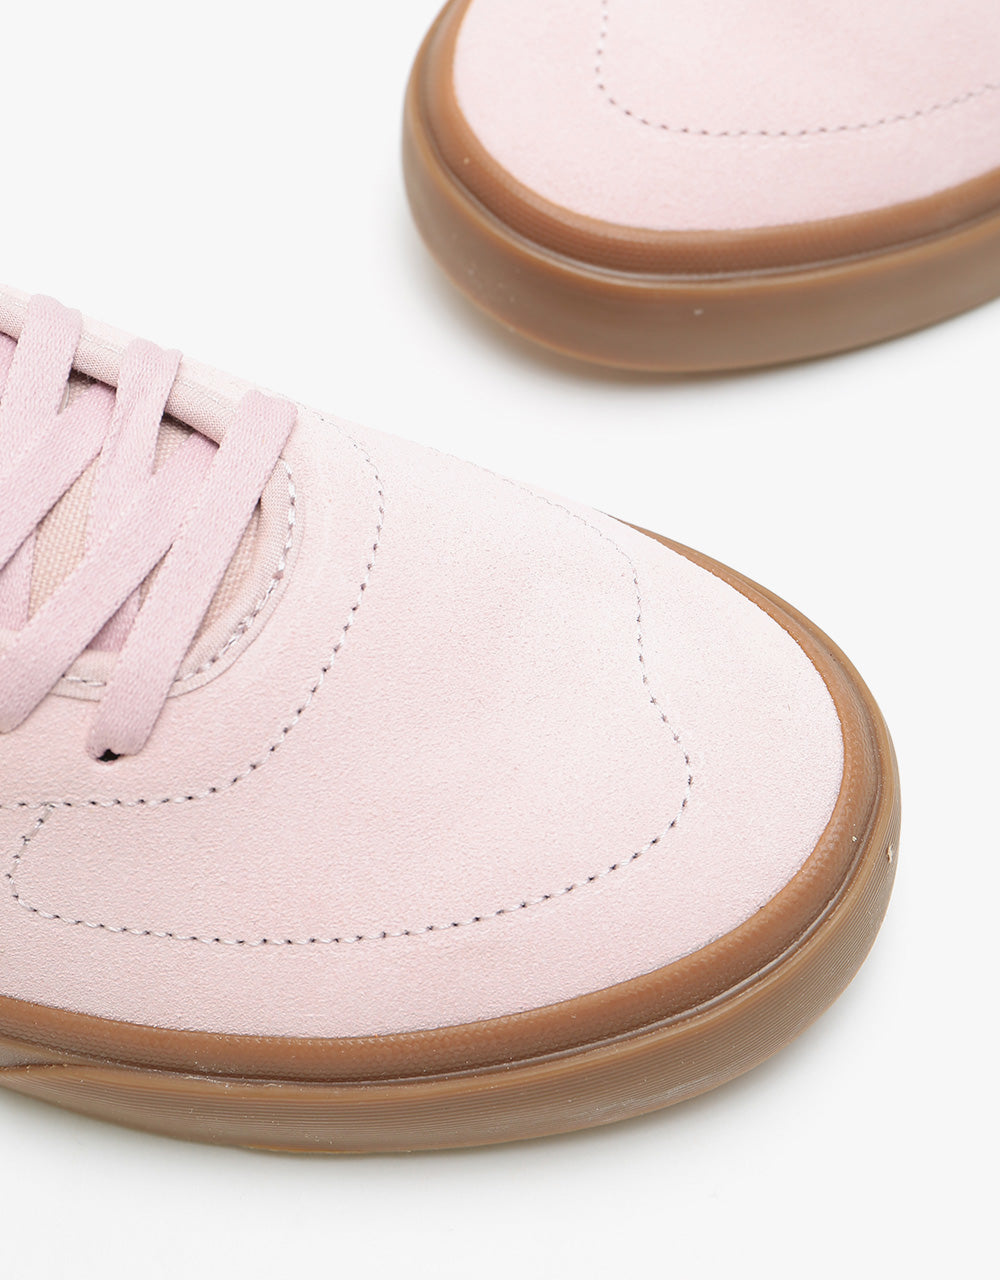 New Balance Numeric 379 Skate Shoes - Pink/Gum